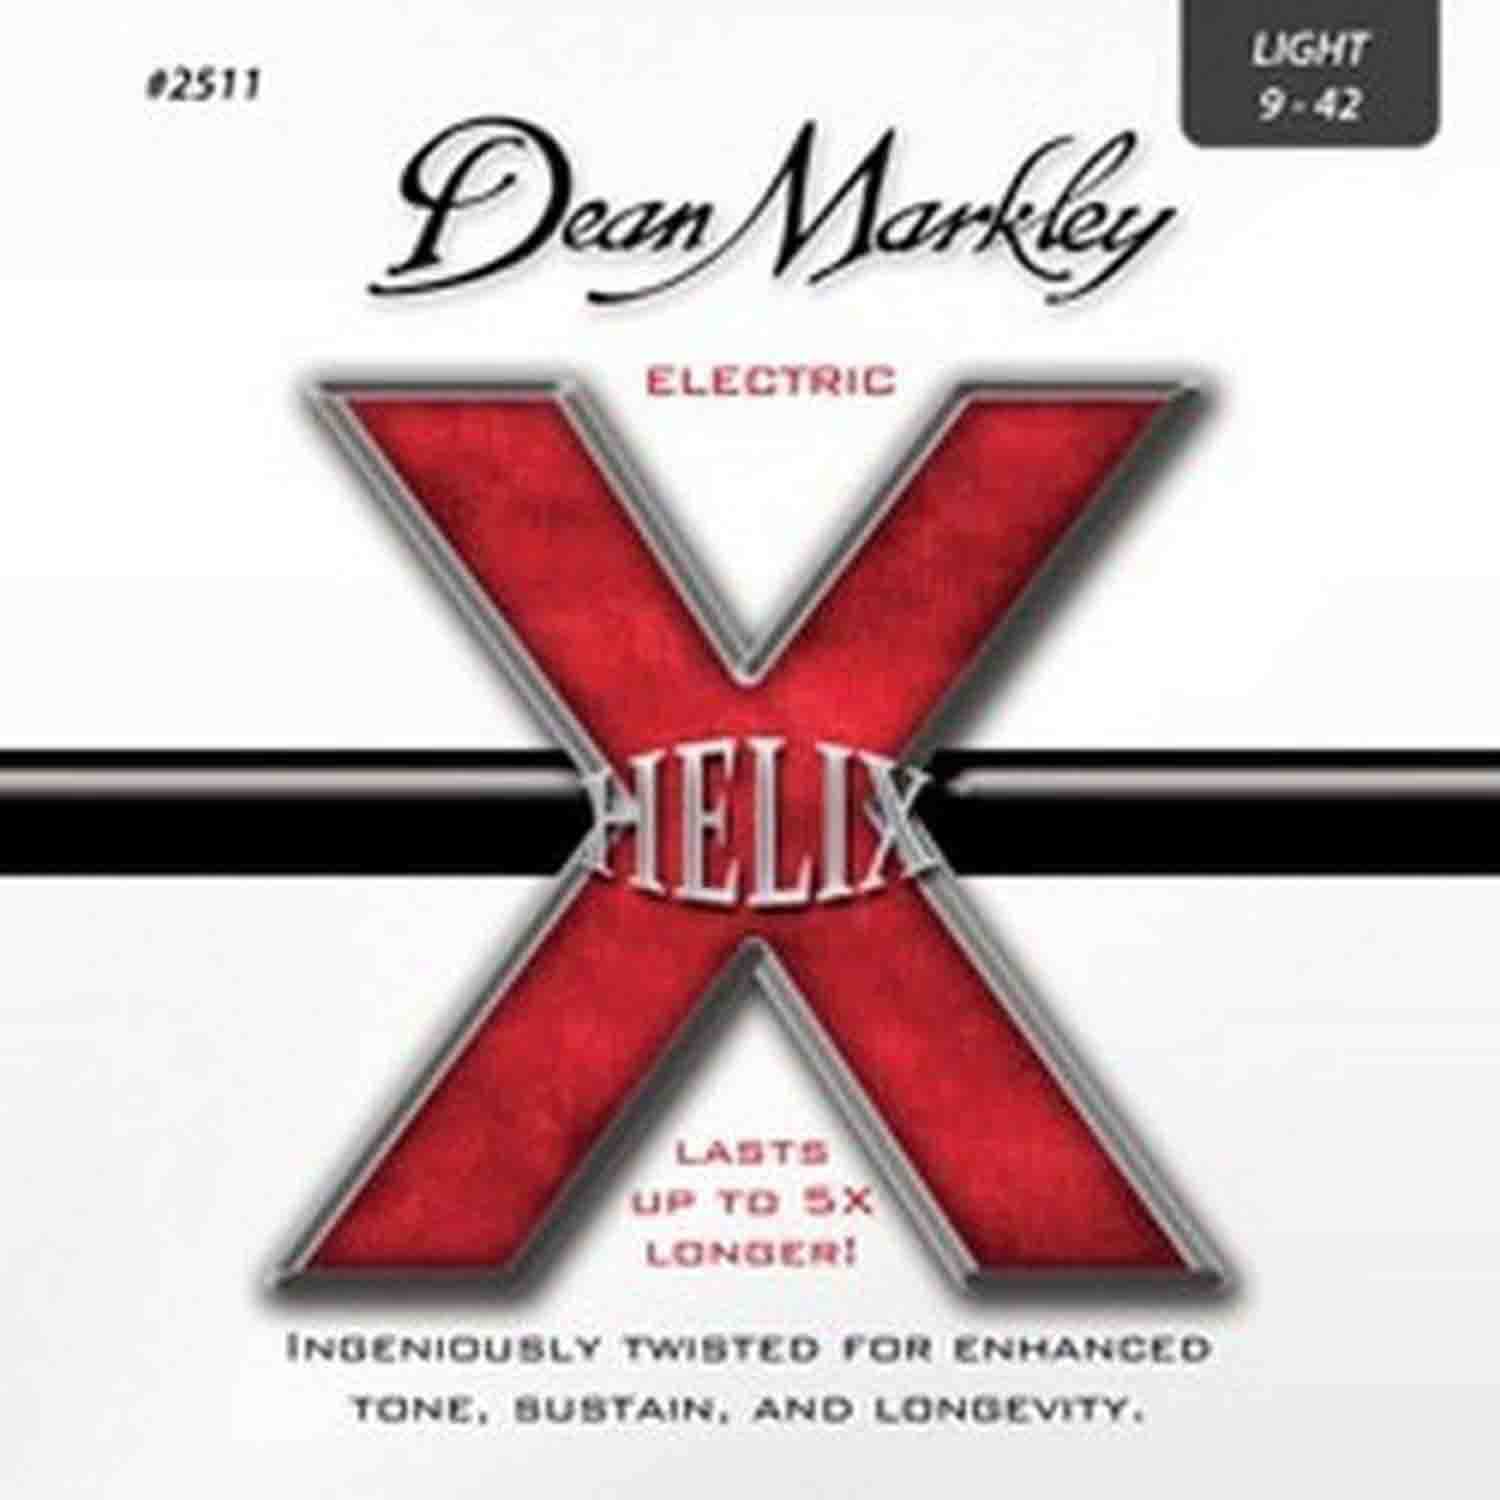 Dean Markley 2511 Helix HD Light Electric Guitar Strings - 9-42 - Hollywood DJ